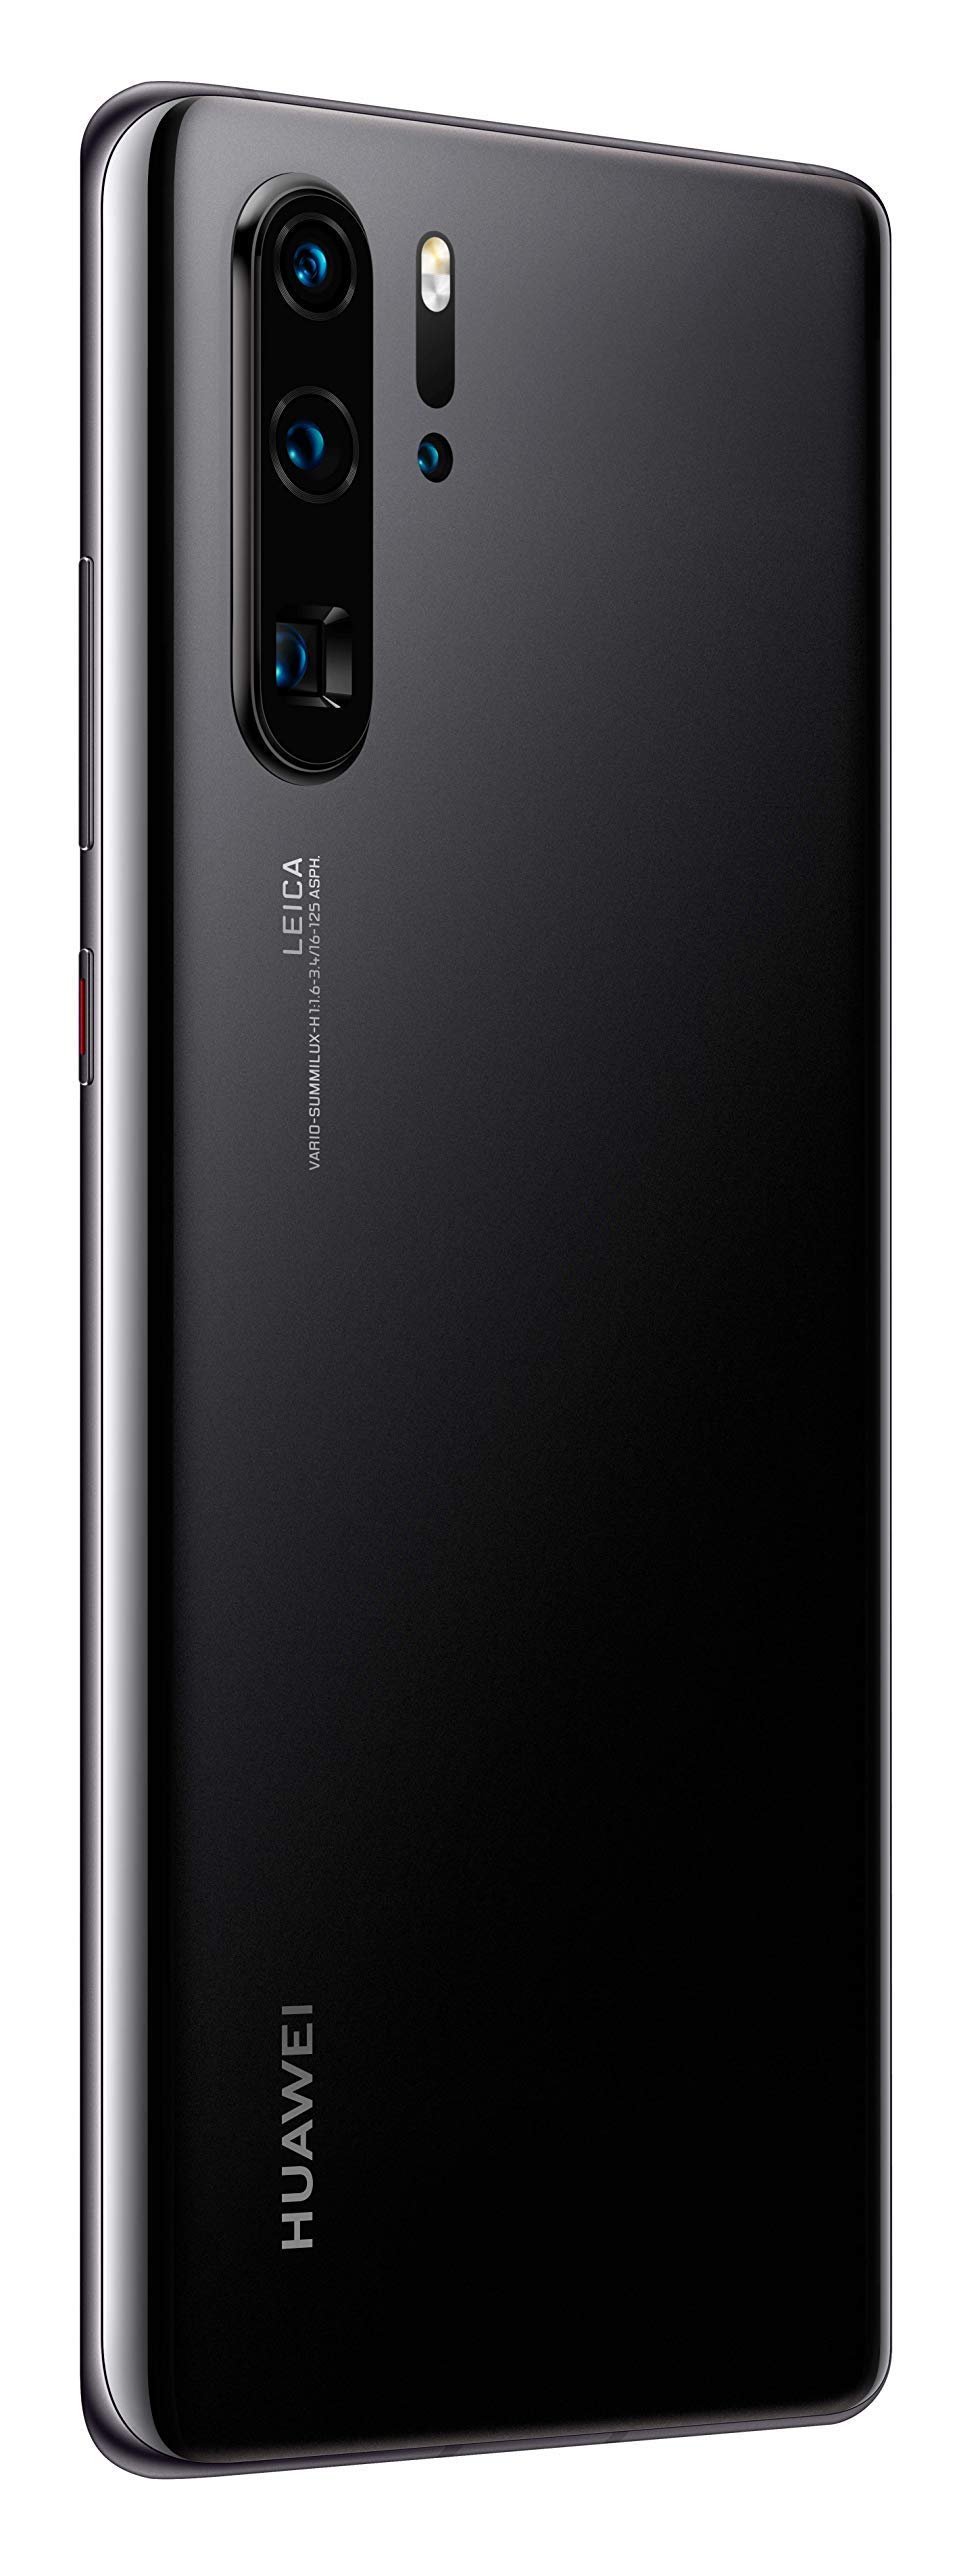 Huawei P30 Pro 256 GB Dual/Hybrid-SIM 4G Smartphone (Midnight Black)